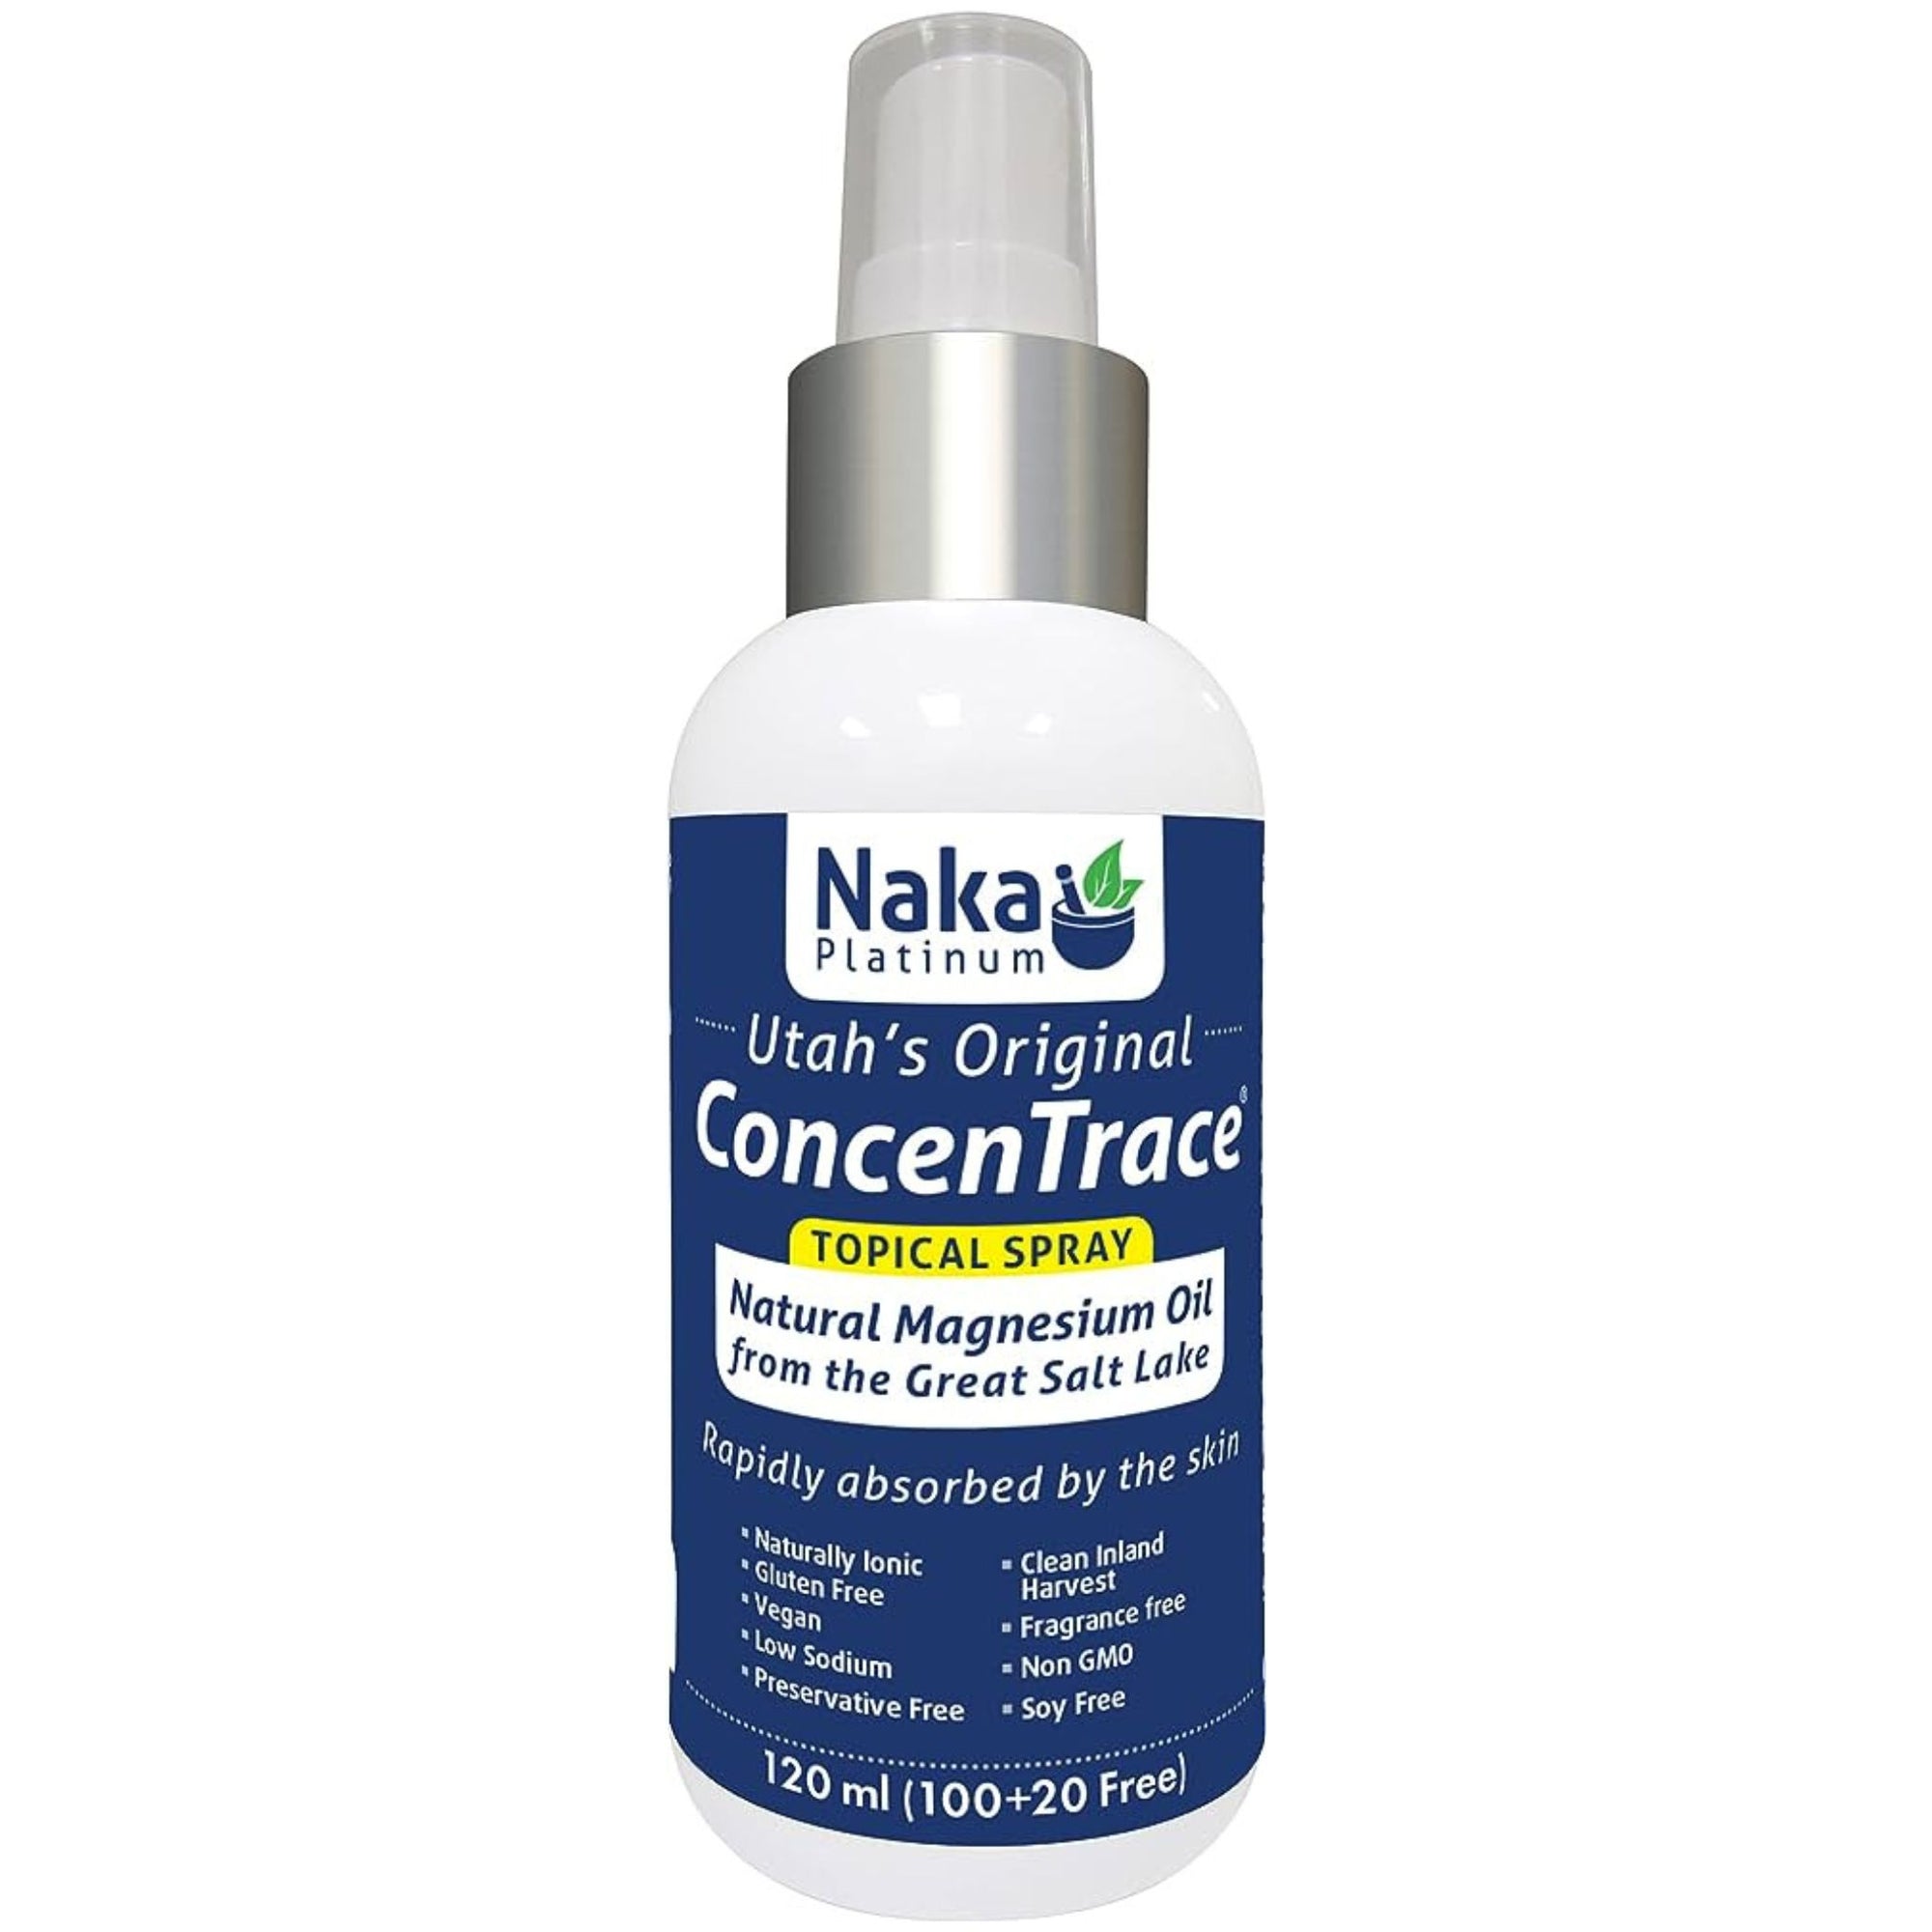 Naka Platinum Concentrace Topical Spray 120ml